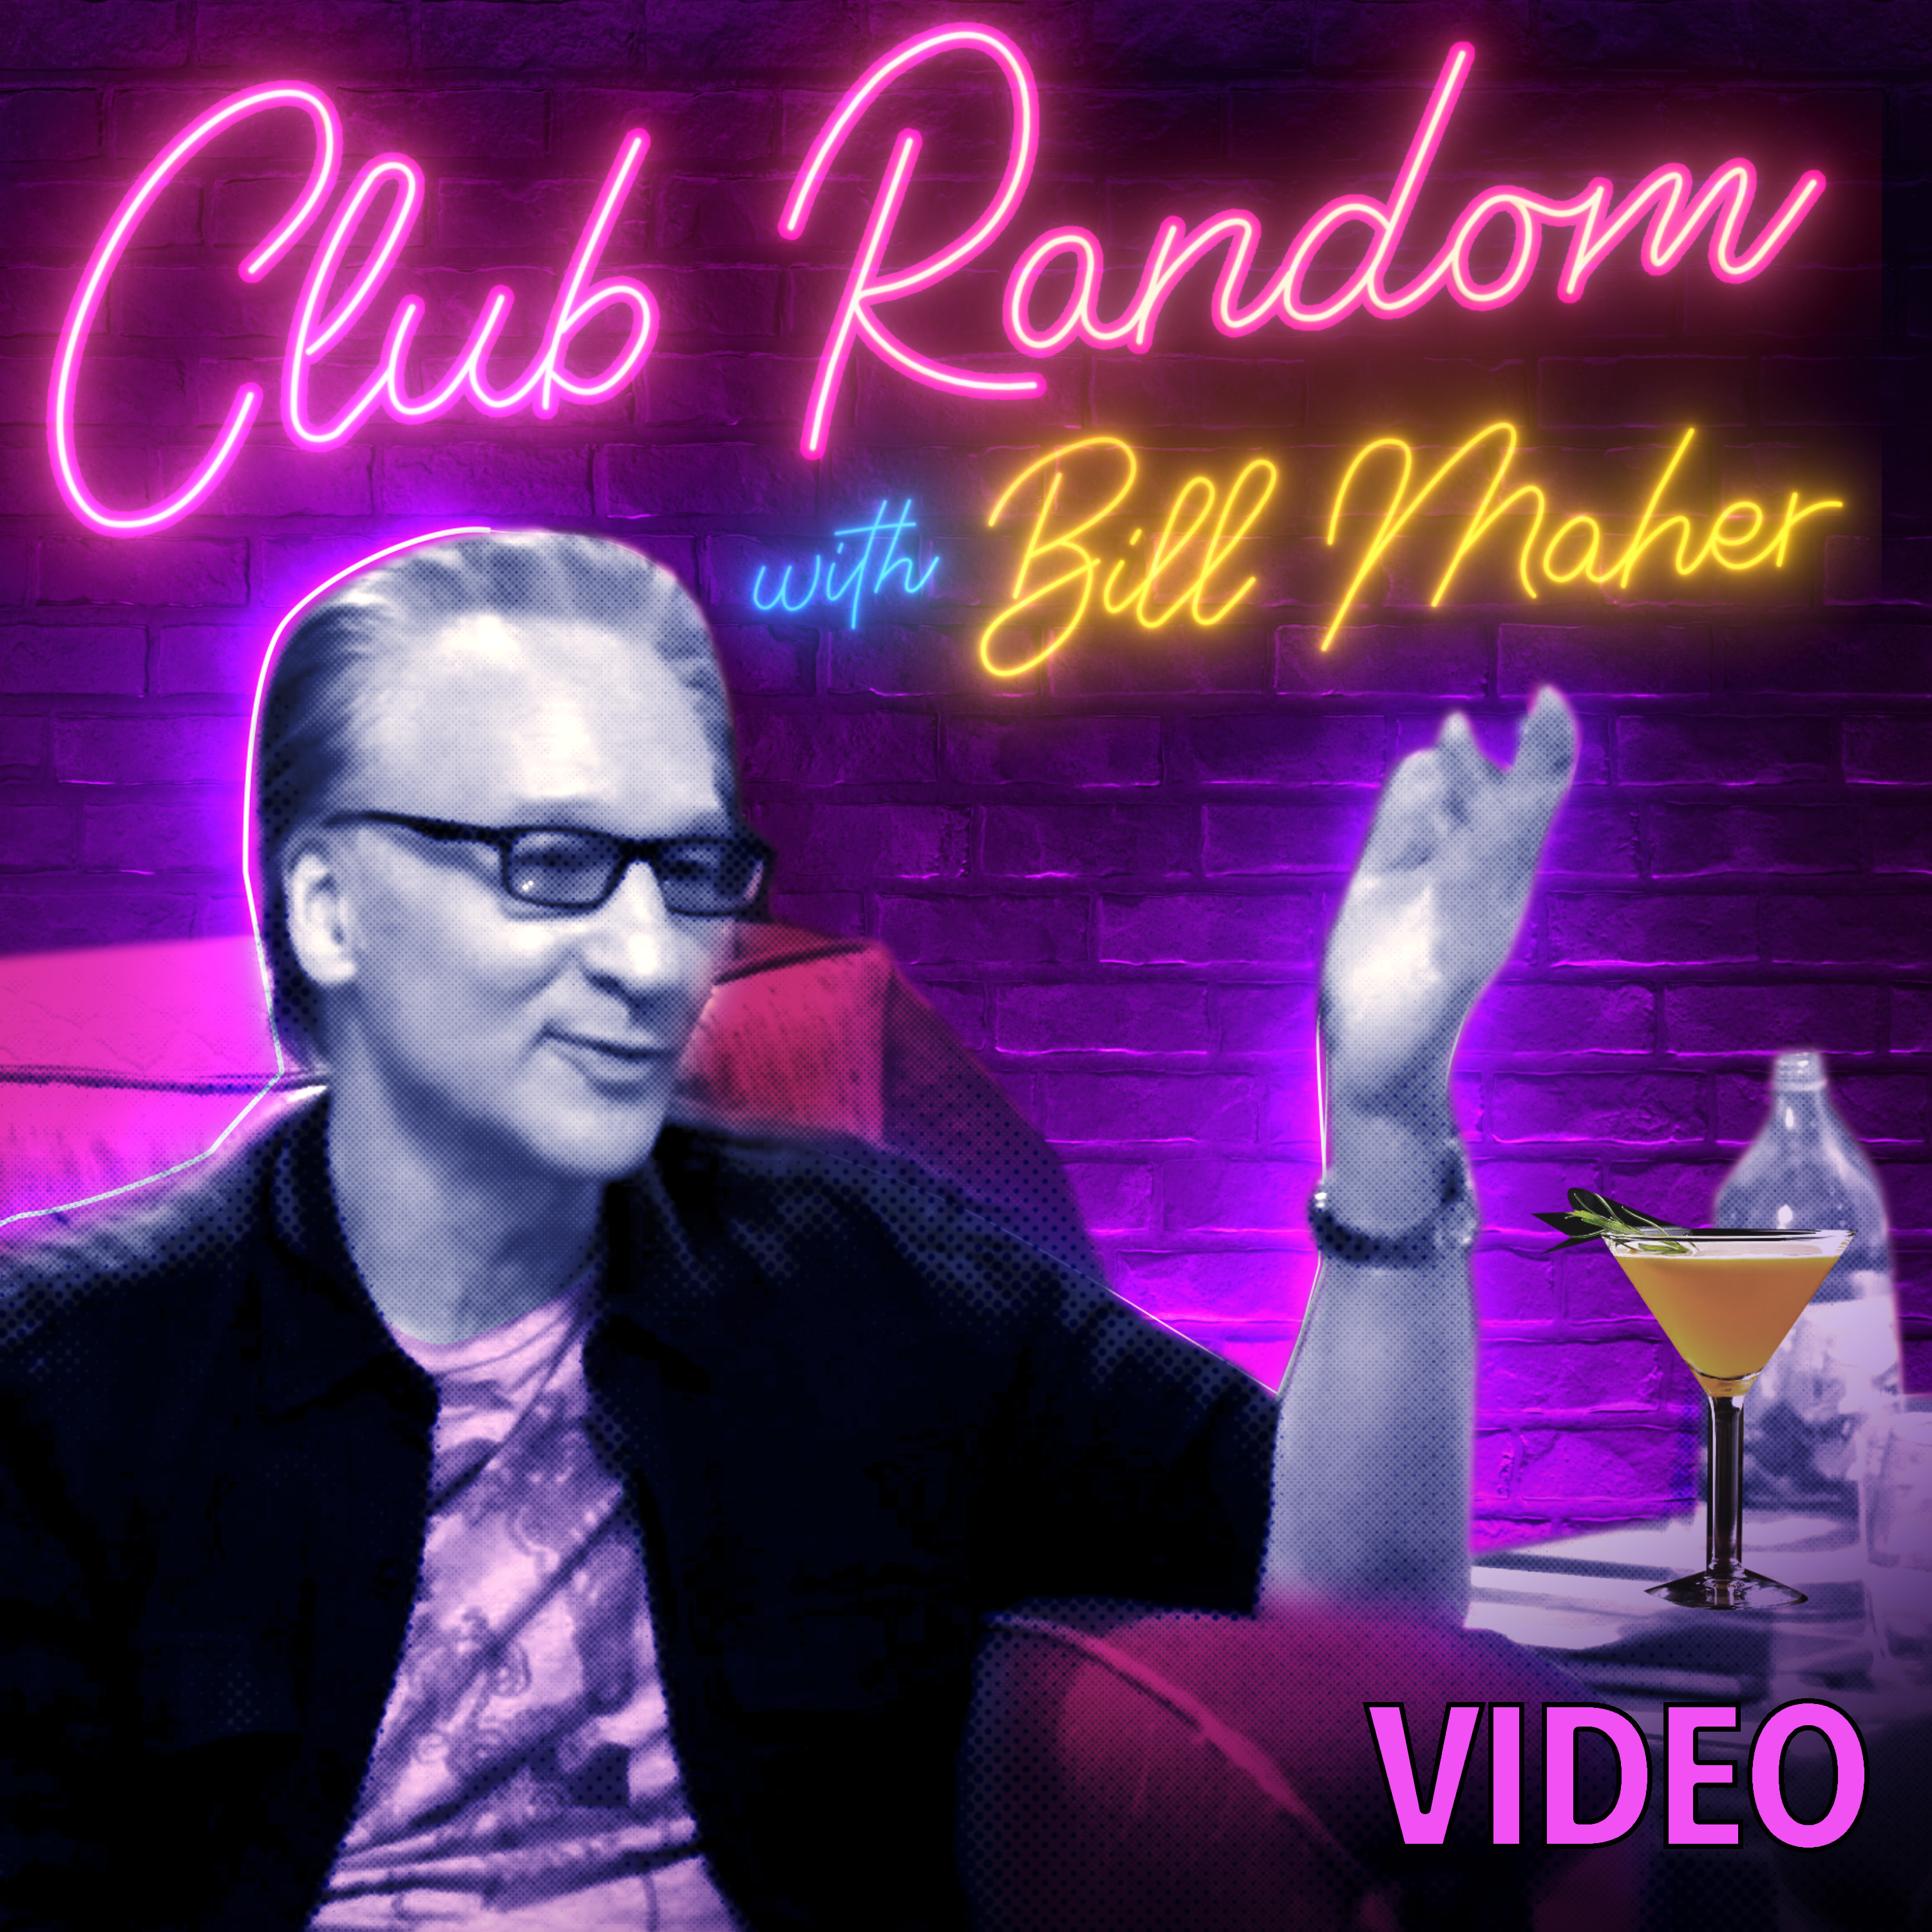 Video: Lars Ulrich | Club Random with Bill Maher